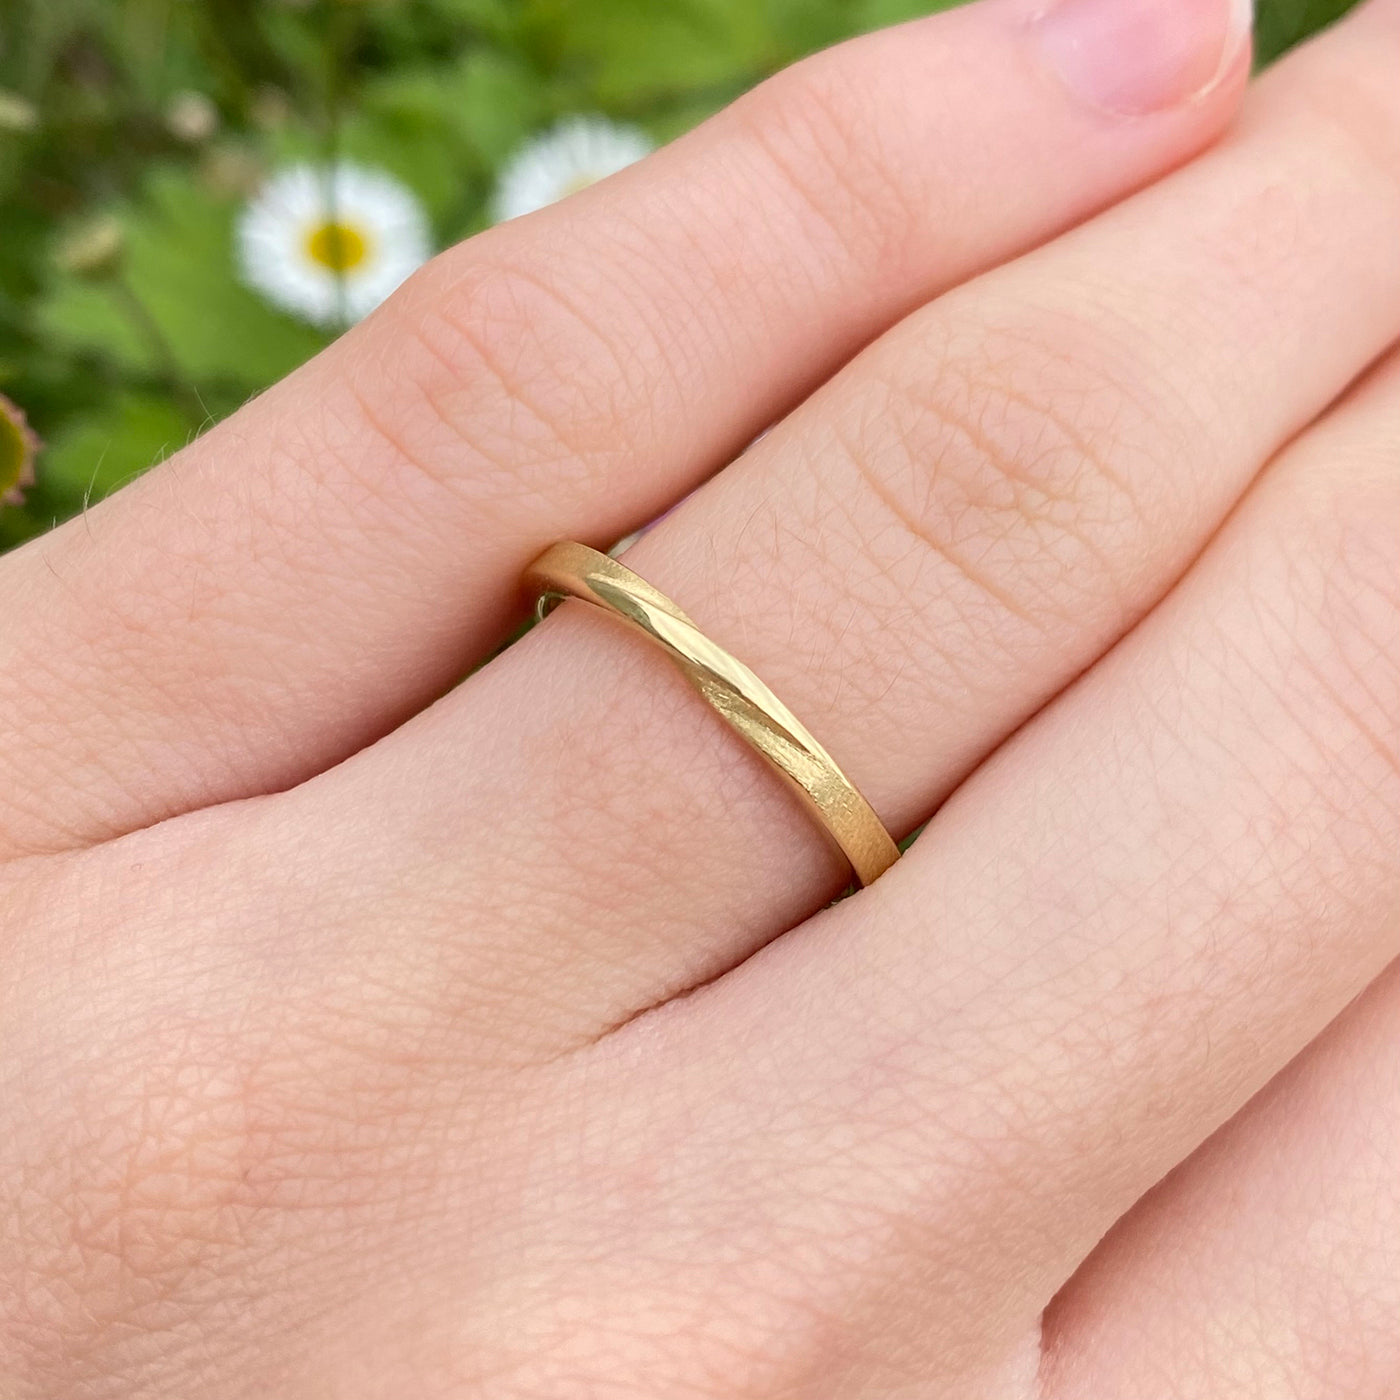 18ct Gold Slim 2mm Spun Silk Ribbon Twist Wedding Ring – Size L (Resize G – L 1/2)